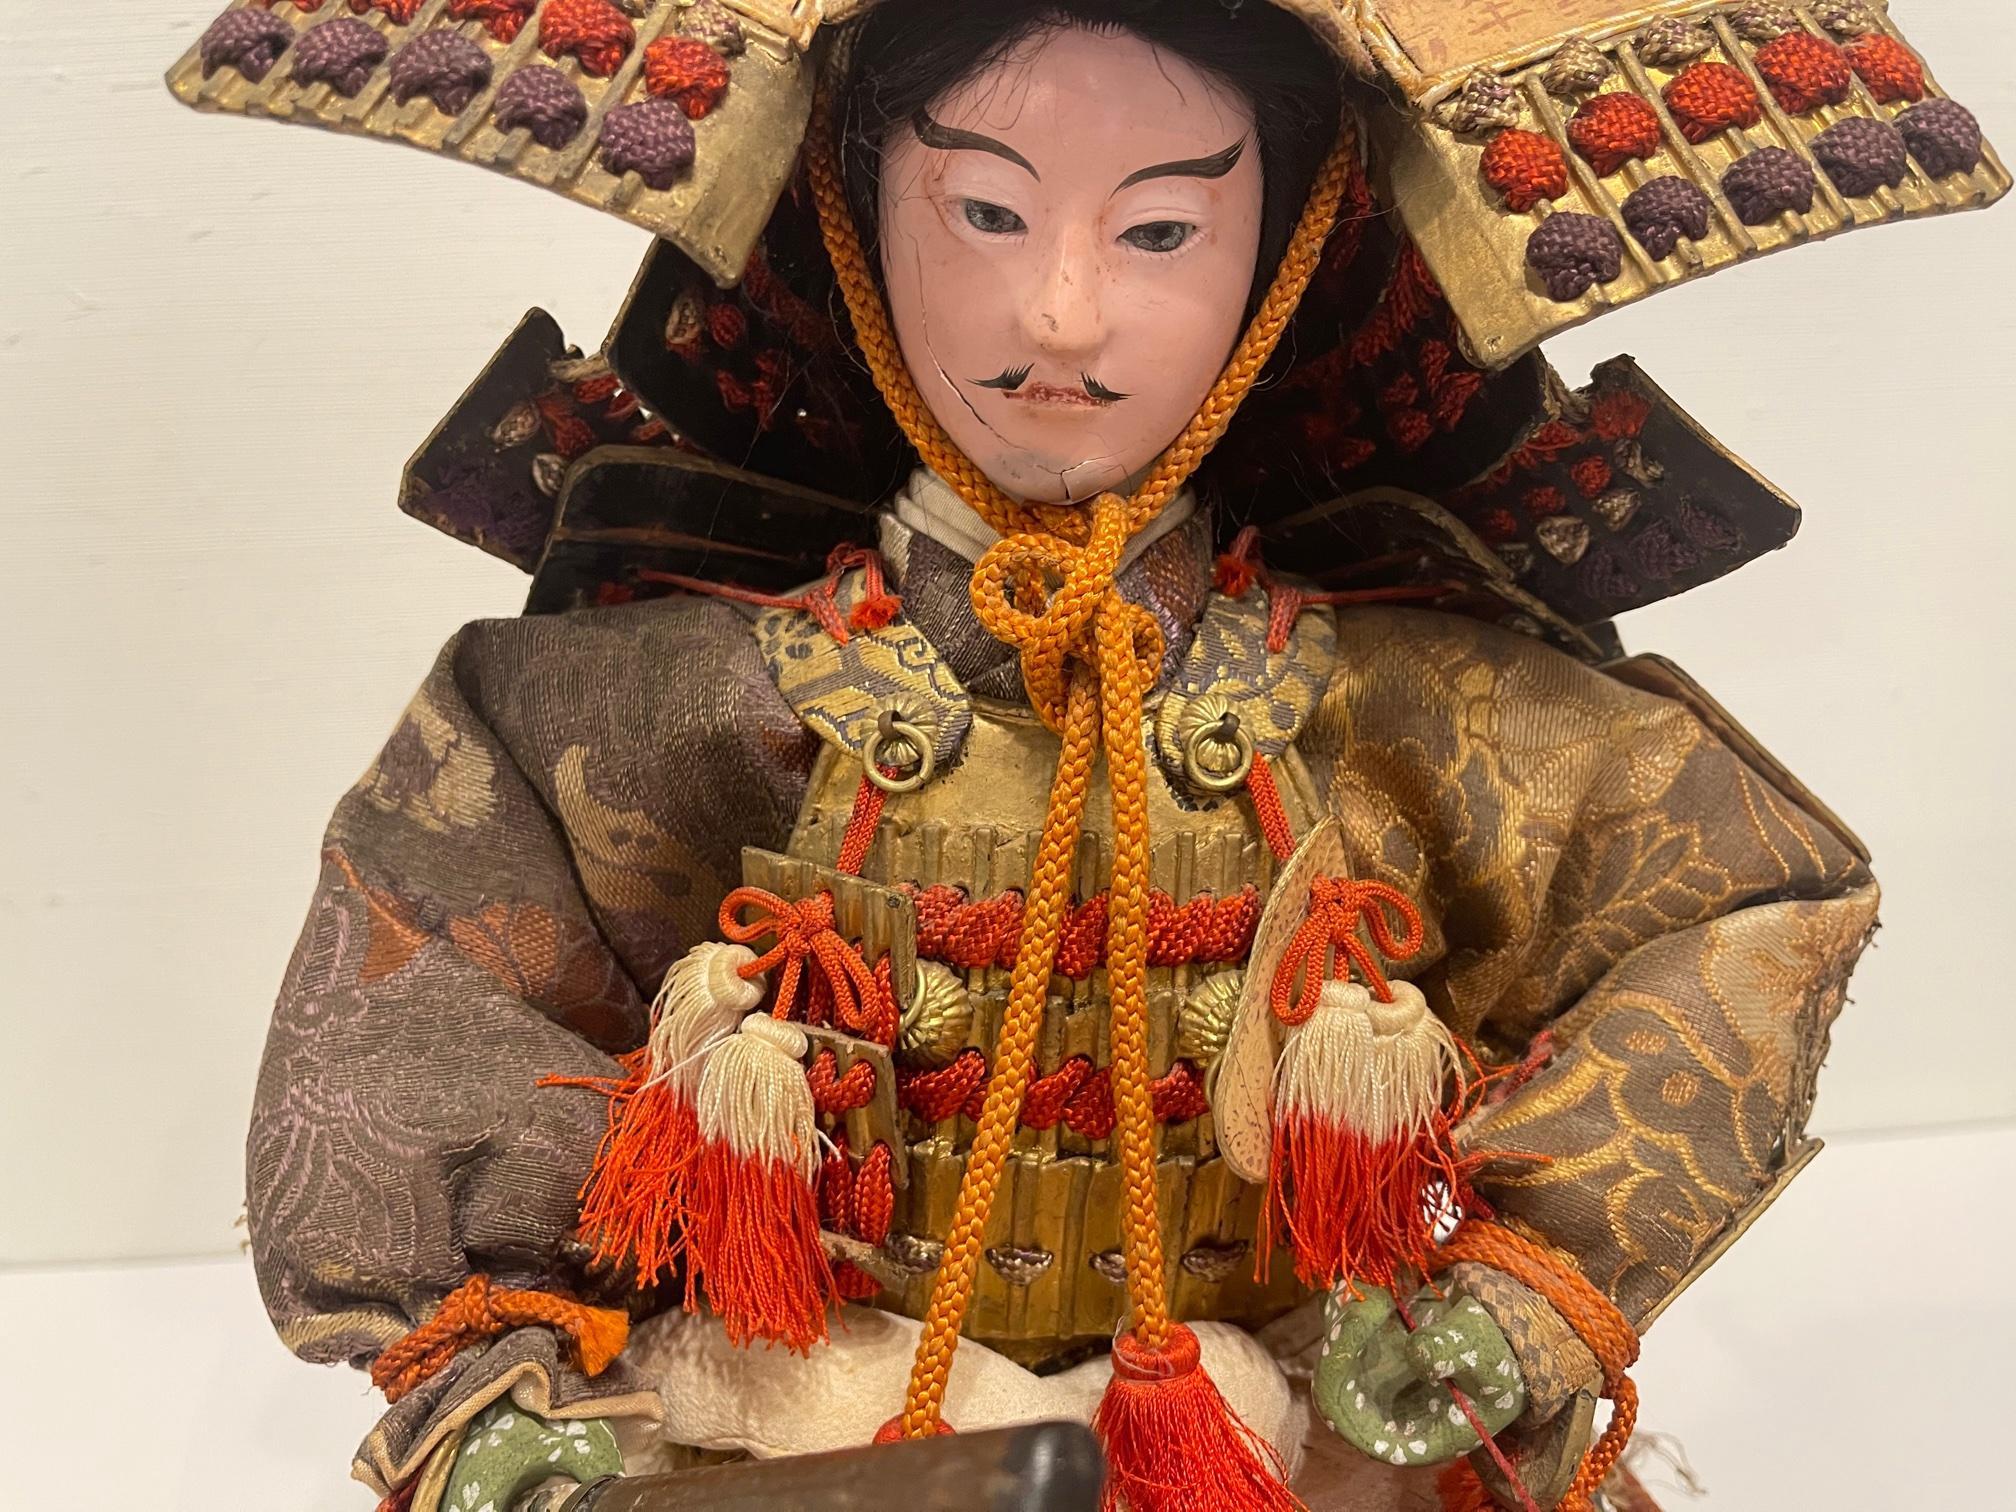 Japanese Samurai Doll or Figure, Meiji Period, Circa 1870s 5